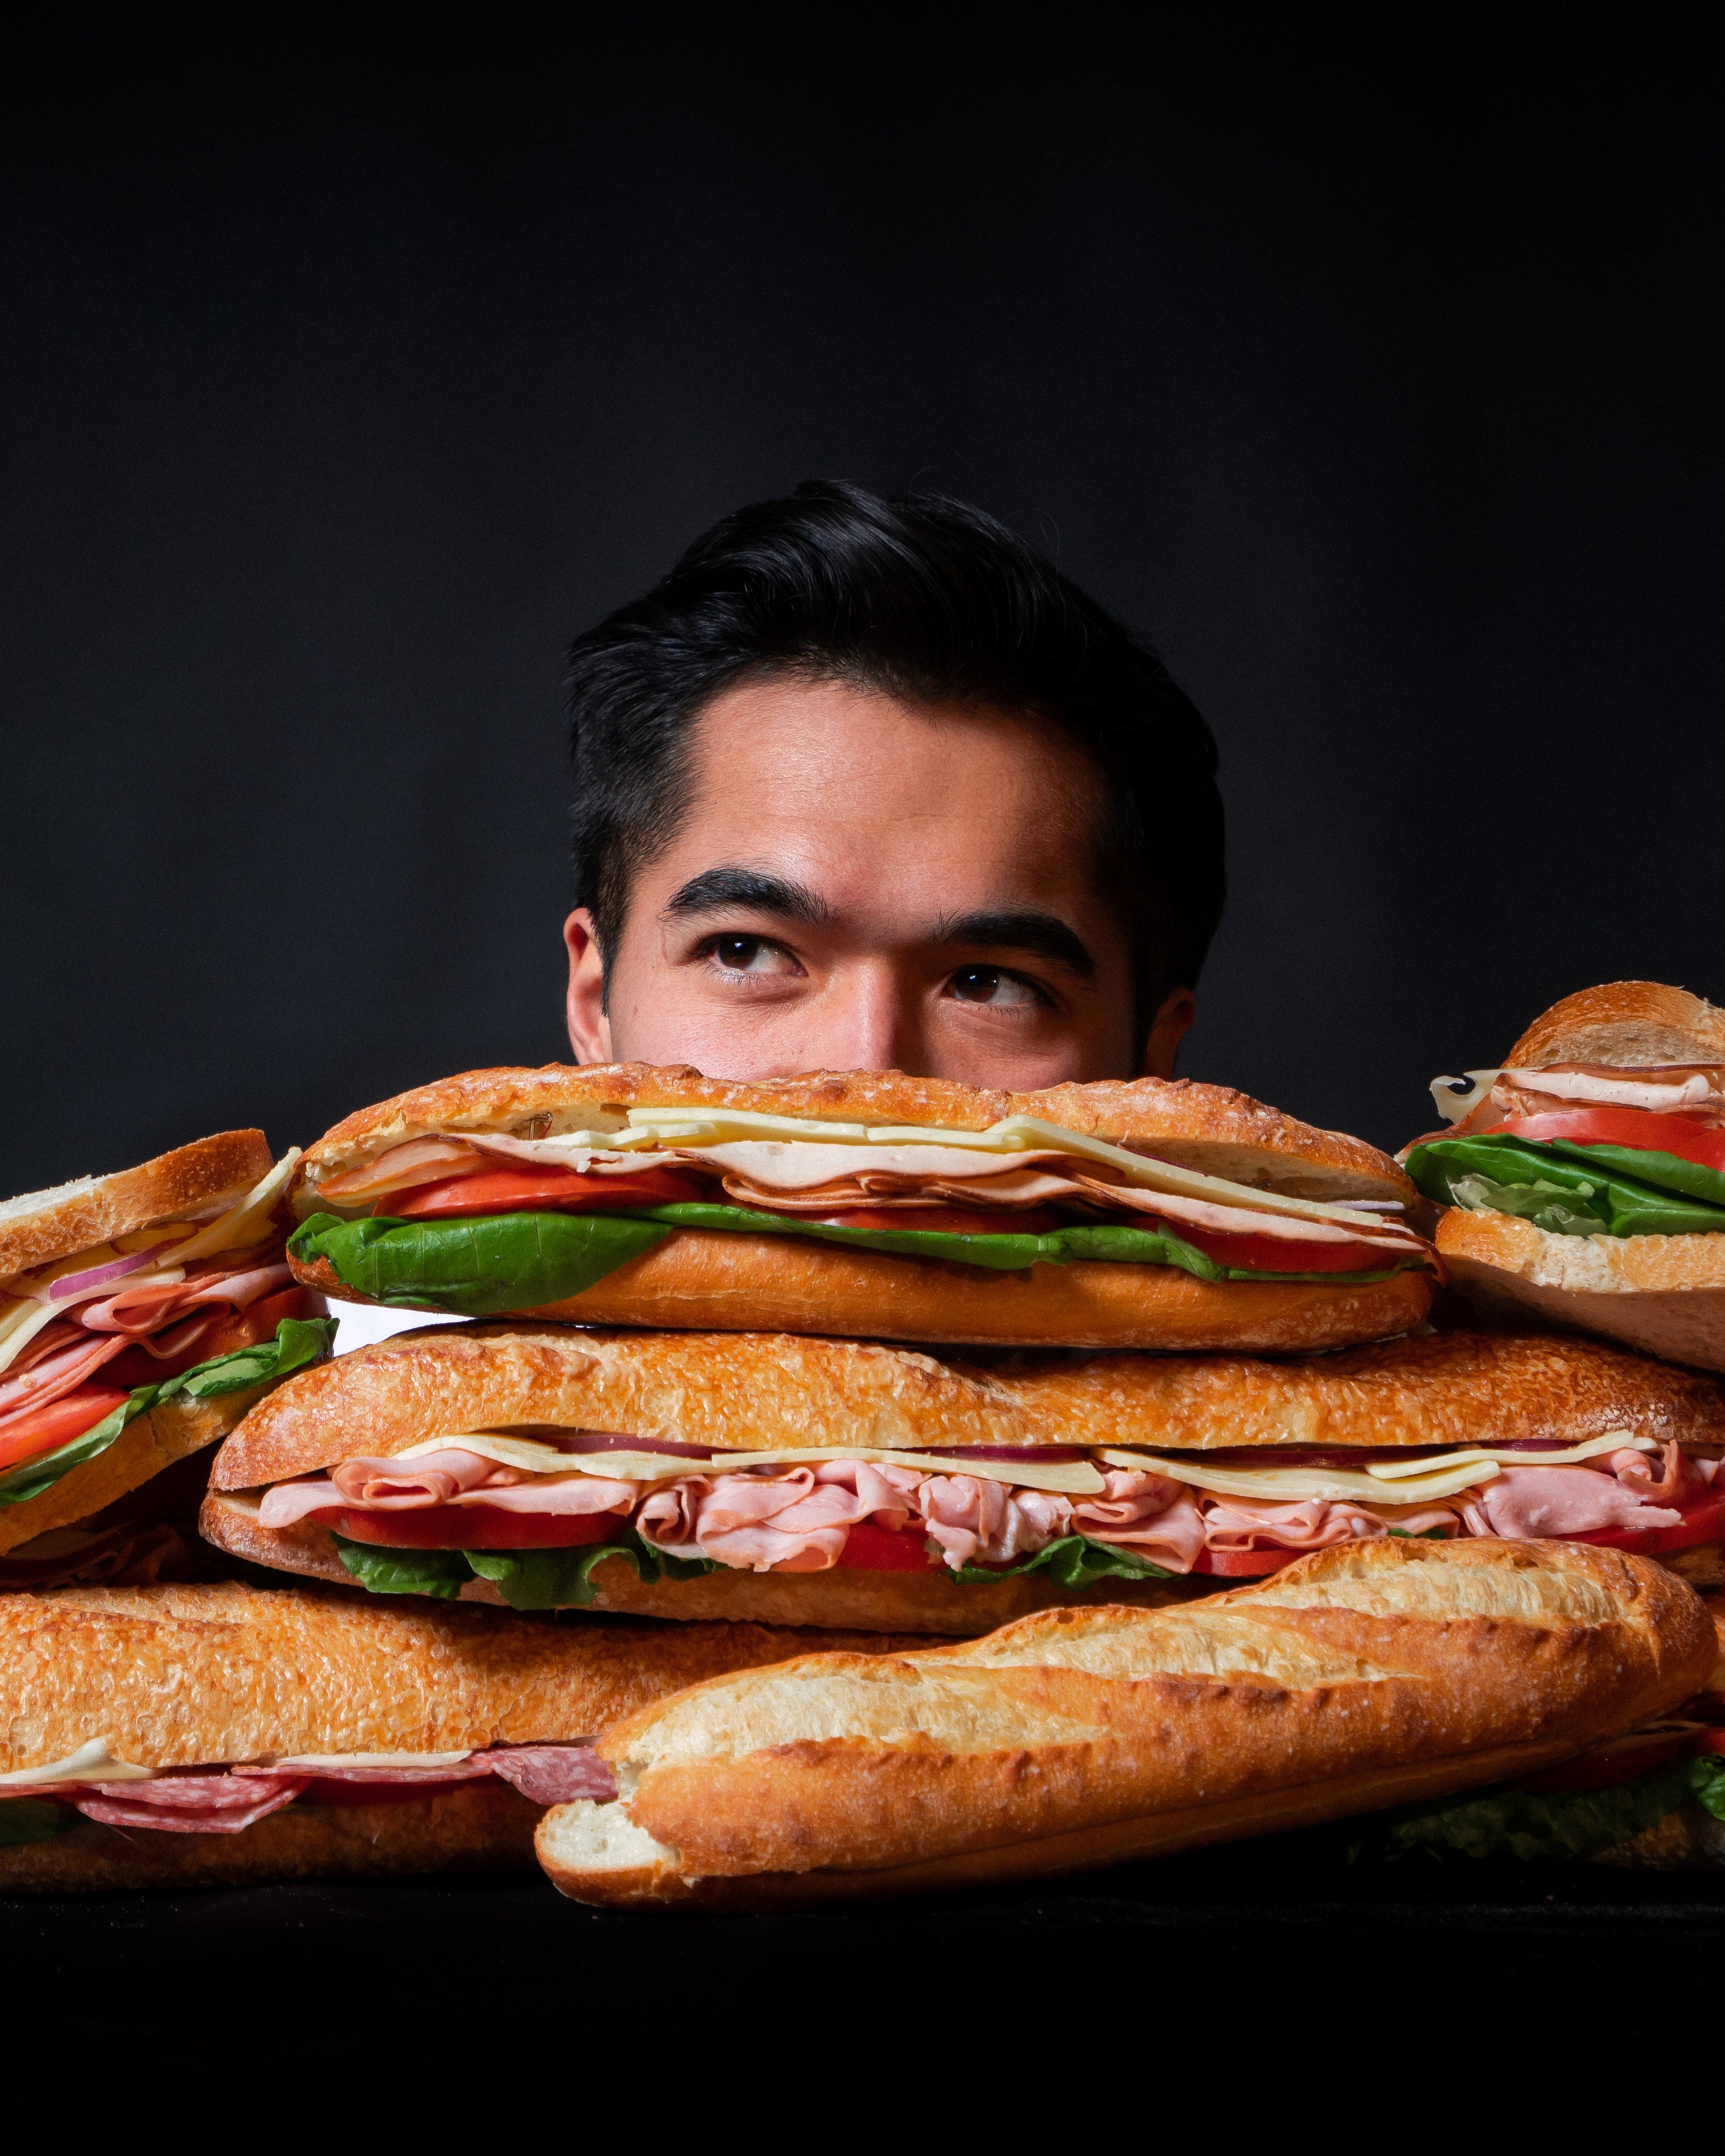 Dubbed “The Sandwich King” on TikTok, Owen Han has millions of followers across social media for his ASMR-style food videos. Photo: Brendan North